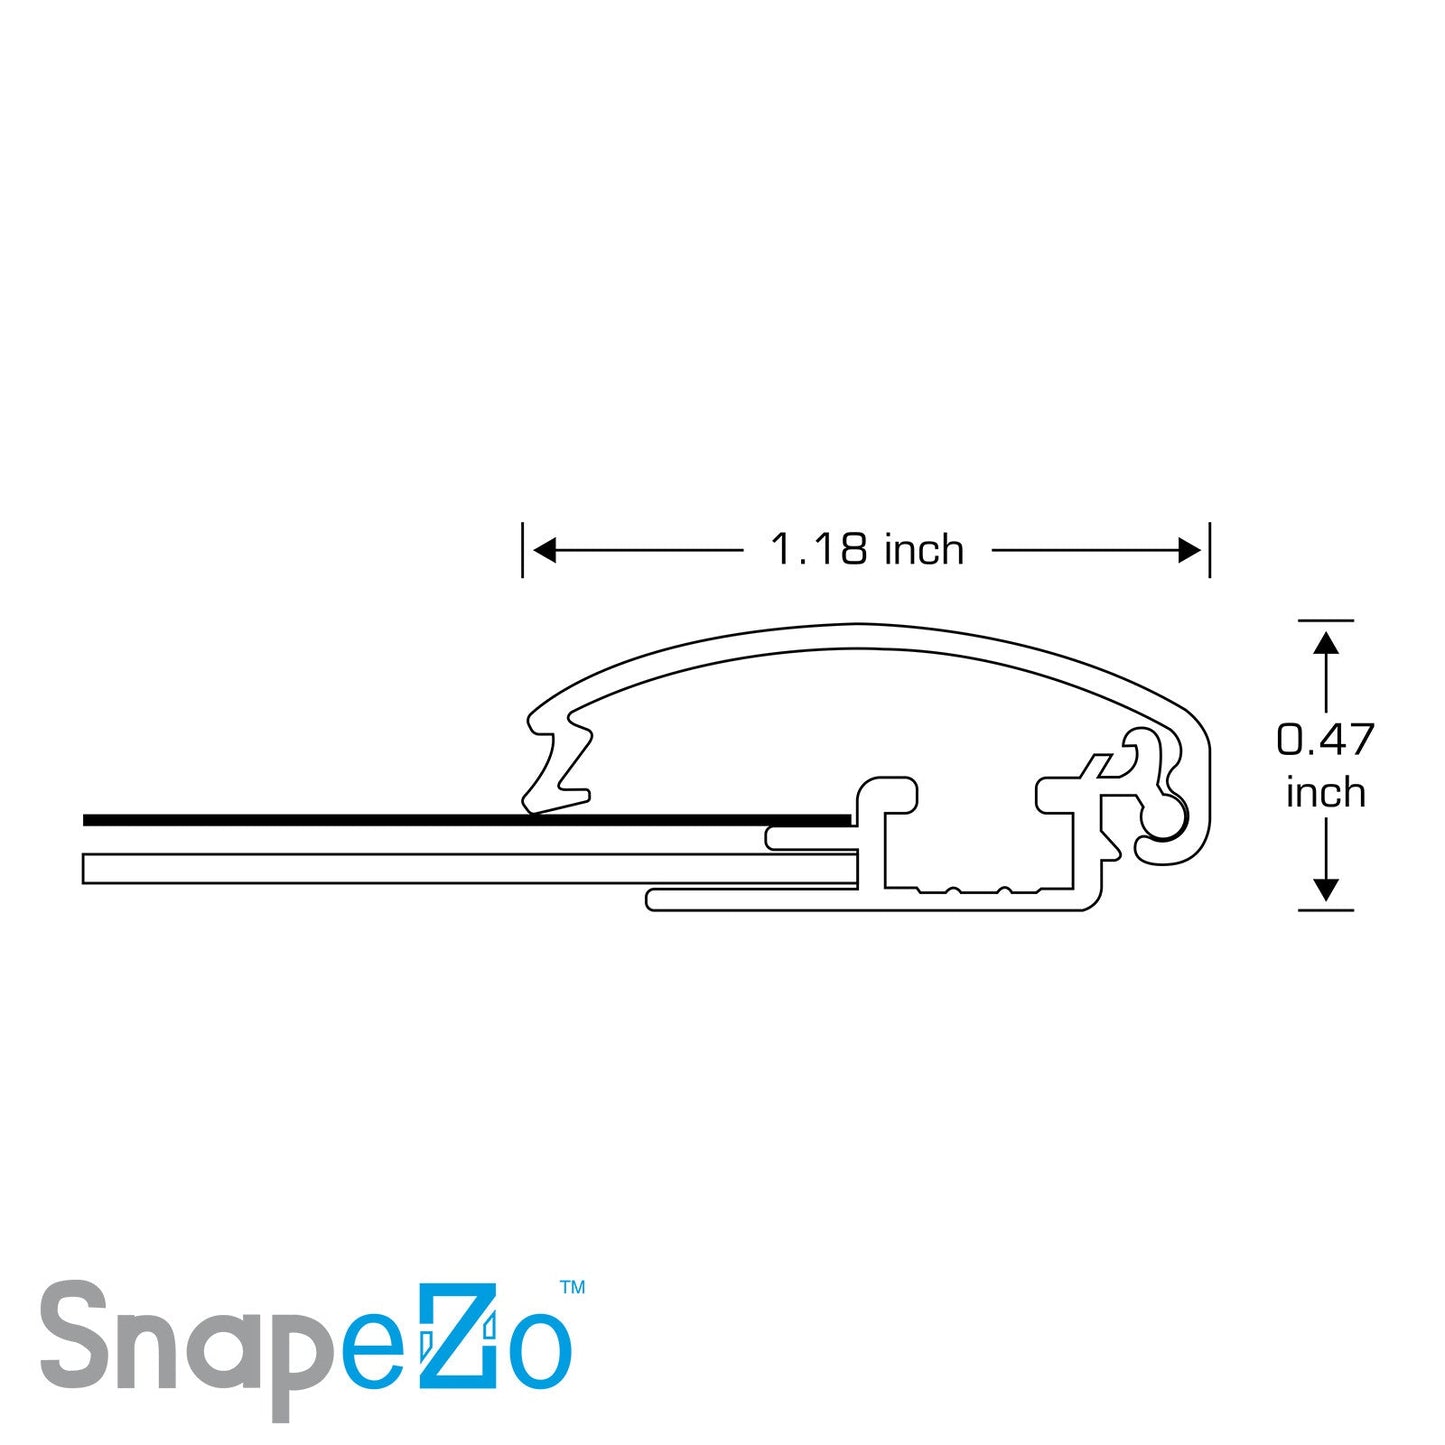 13x19 Silver SnapeZo® Snap Frame - 1.2" Profile